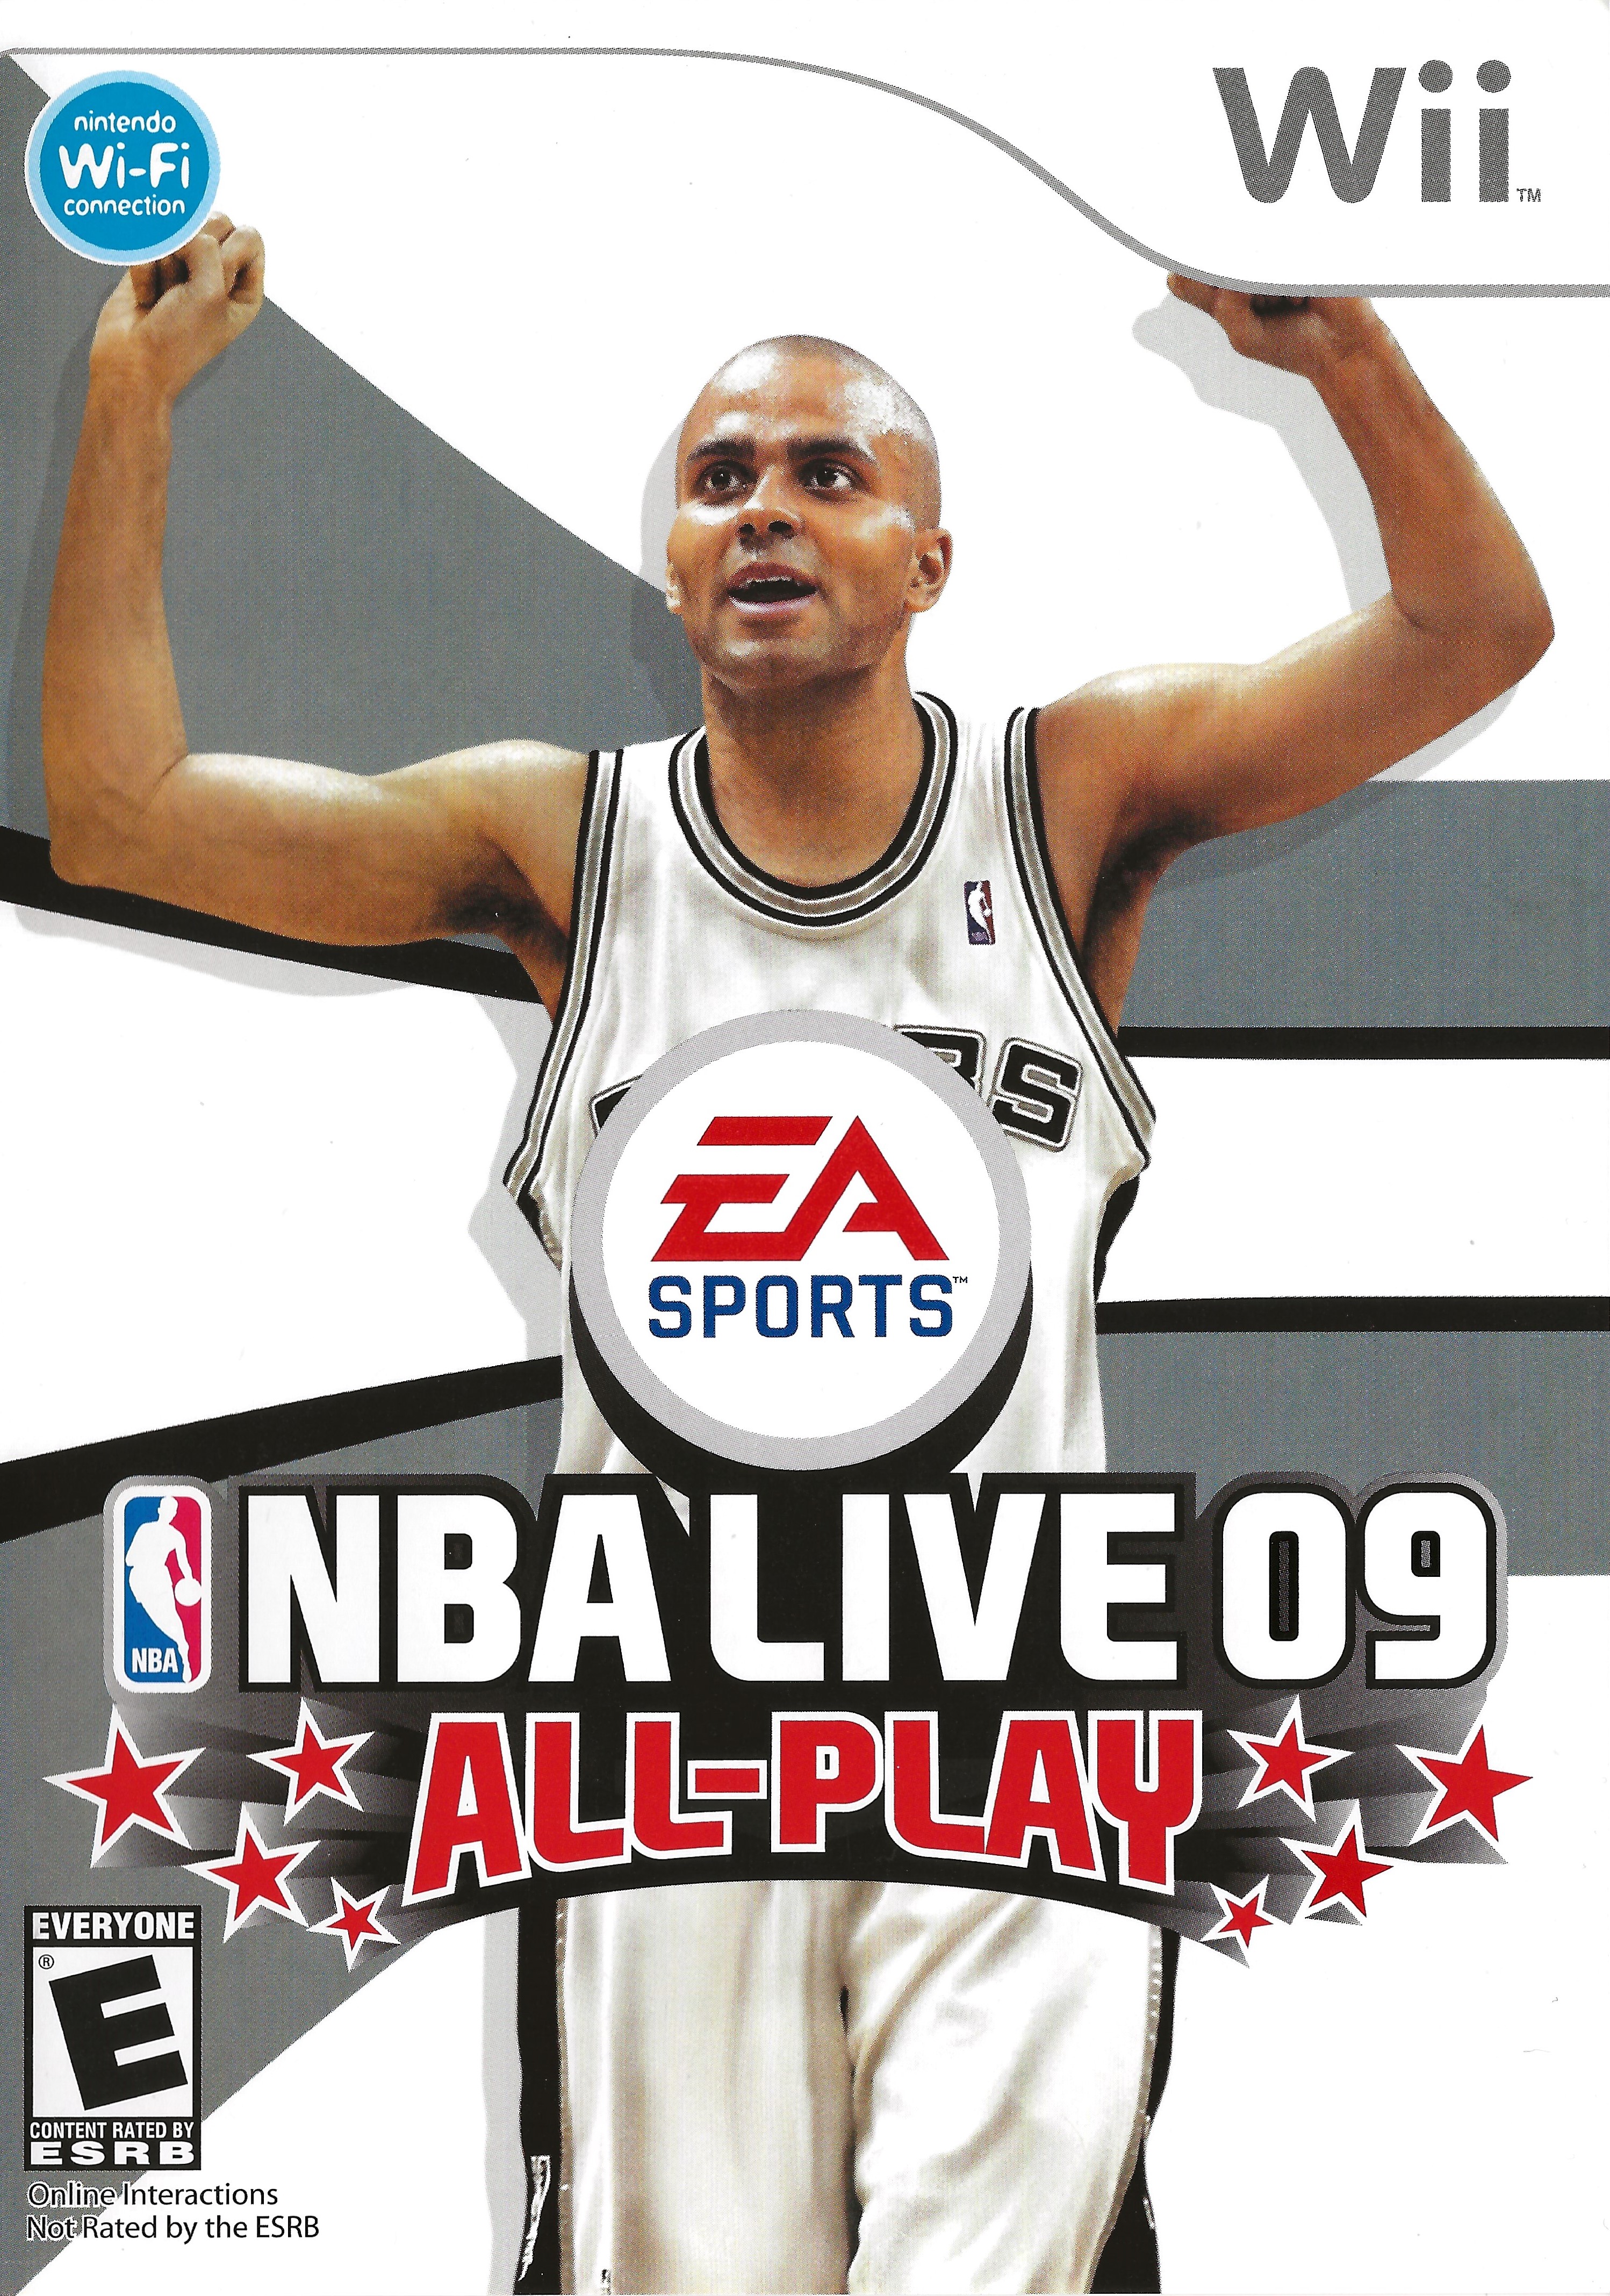 'NBA Live 09 All-Play'